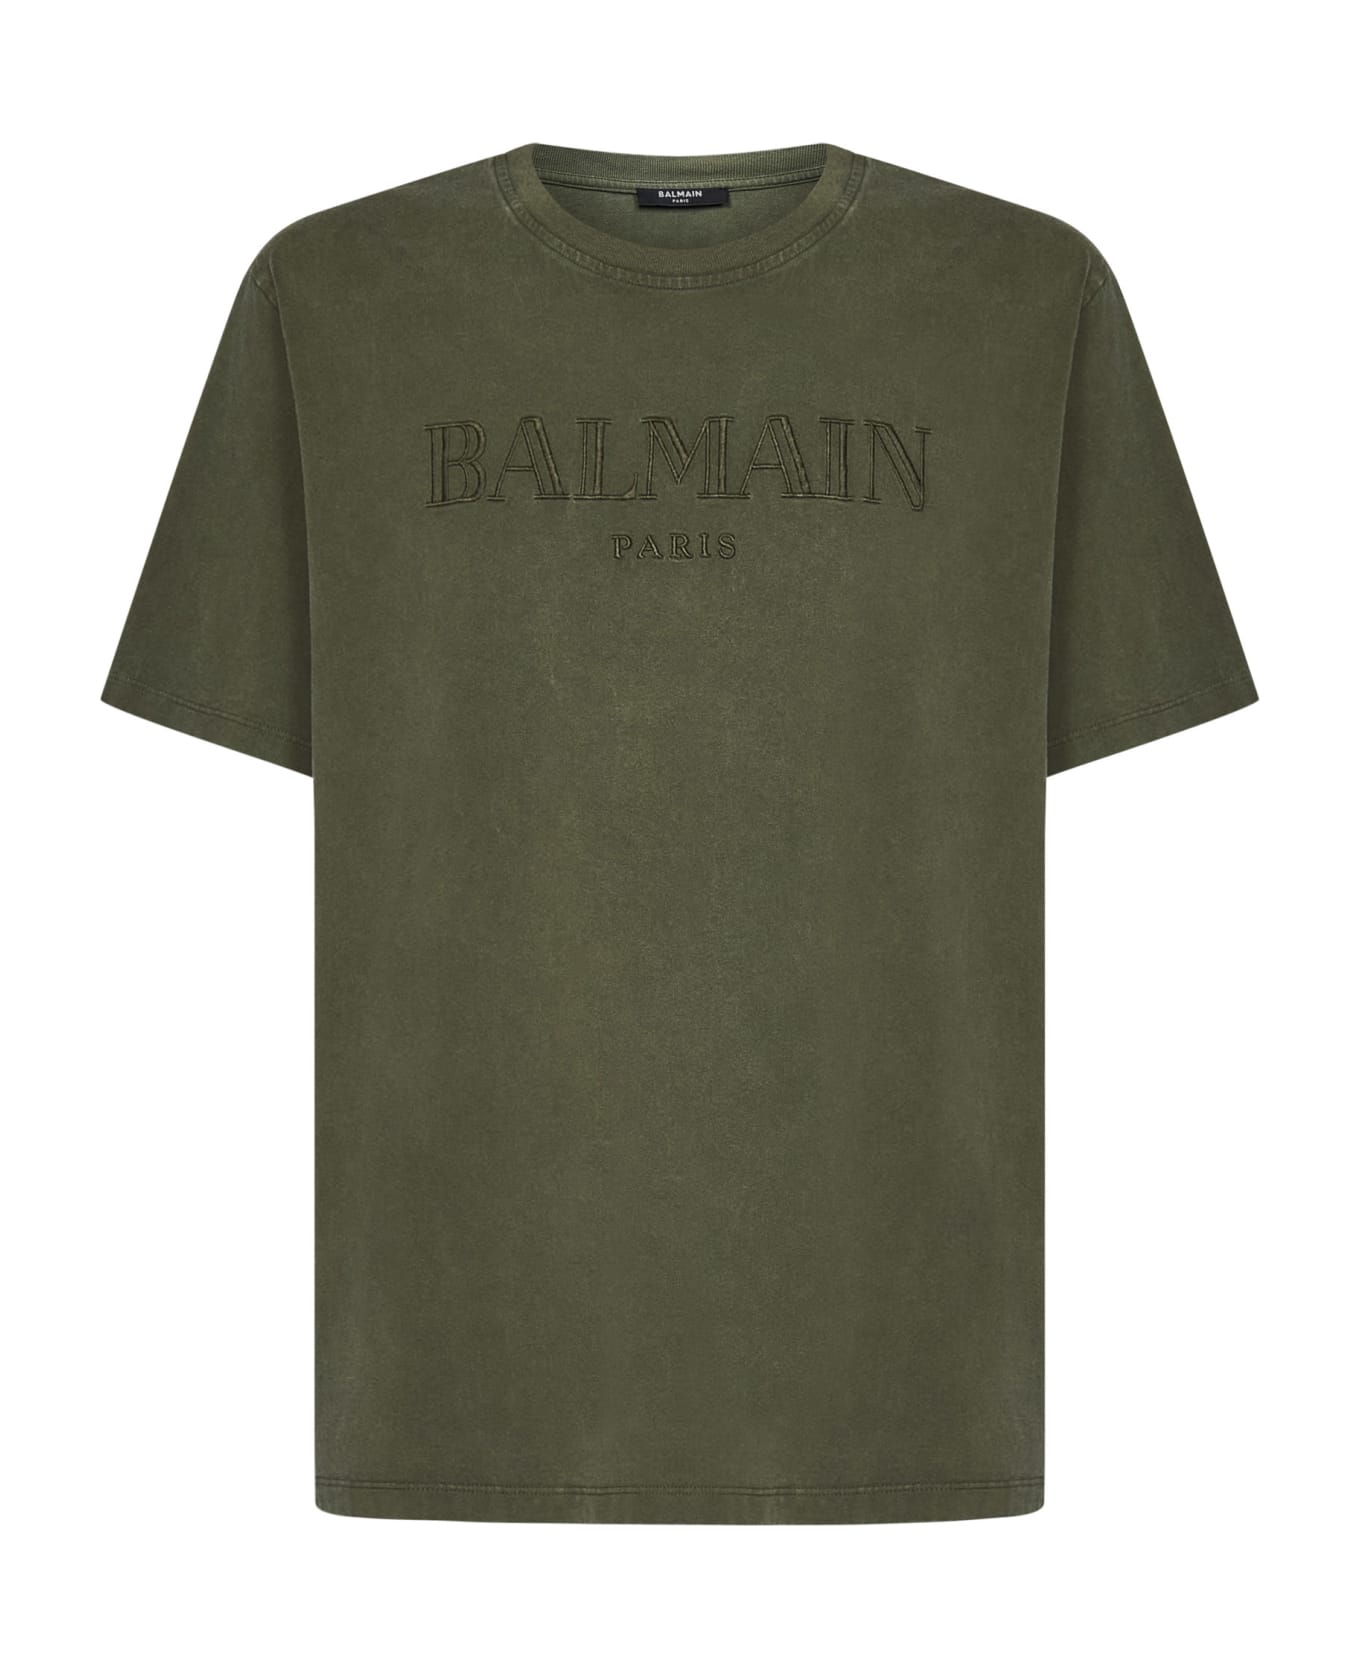 Balmain Paris T-shirt - Green